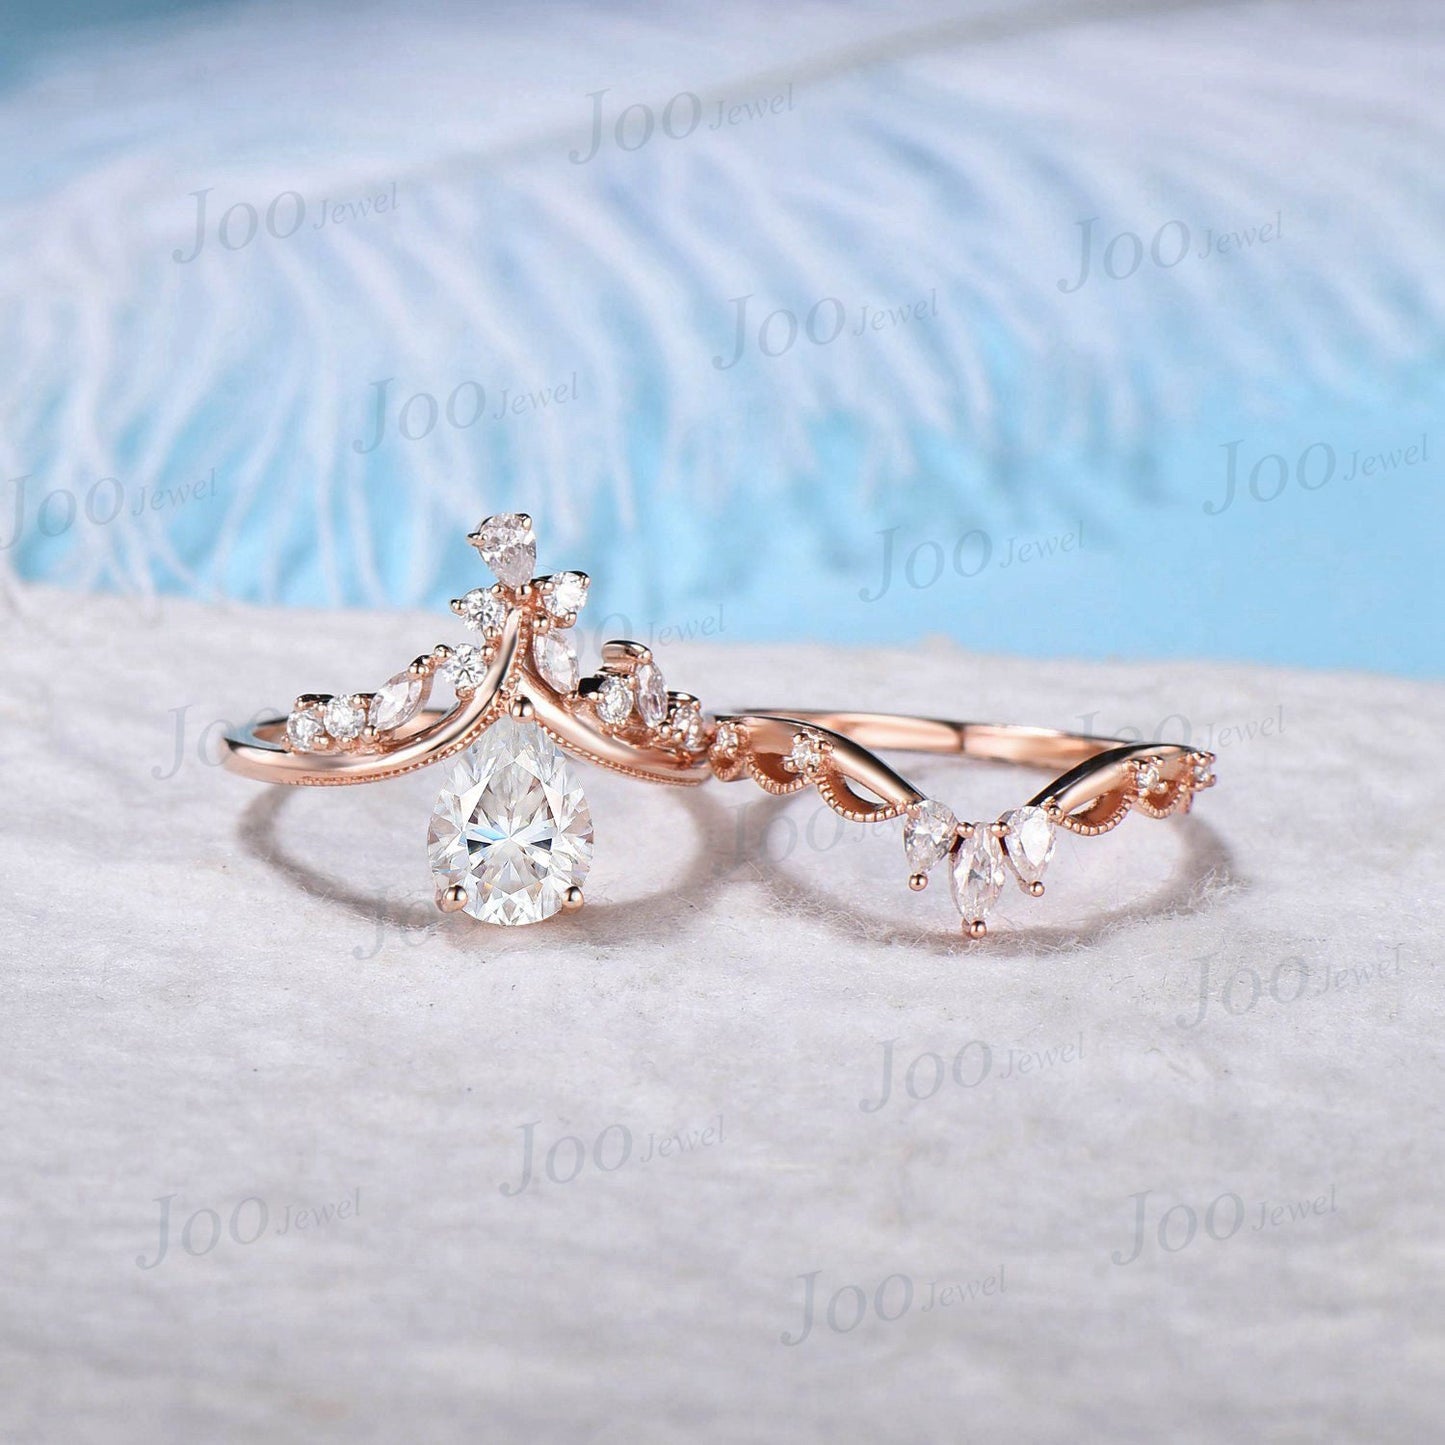 1.25ct Vintage Moissanite Engagement Ring Pear Shaped Art Deco Engagement Ring Cocktail Moissanite Rings 14K Rose Gold Wedding Bridal Set